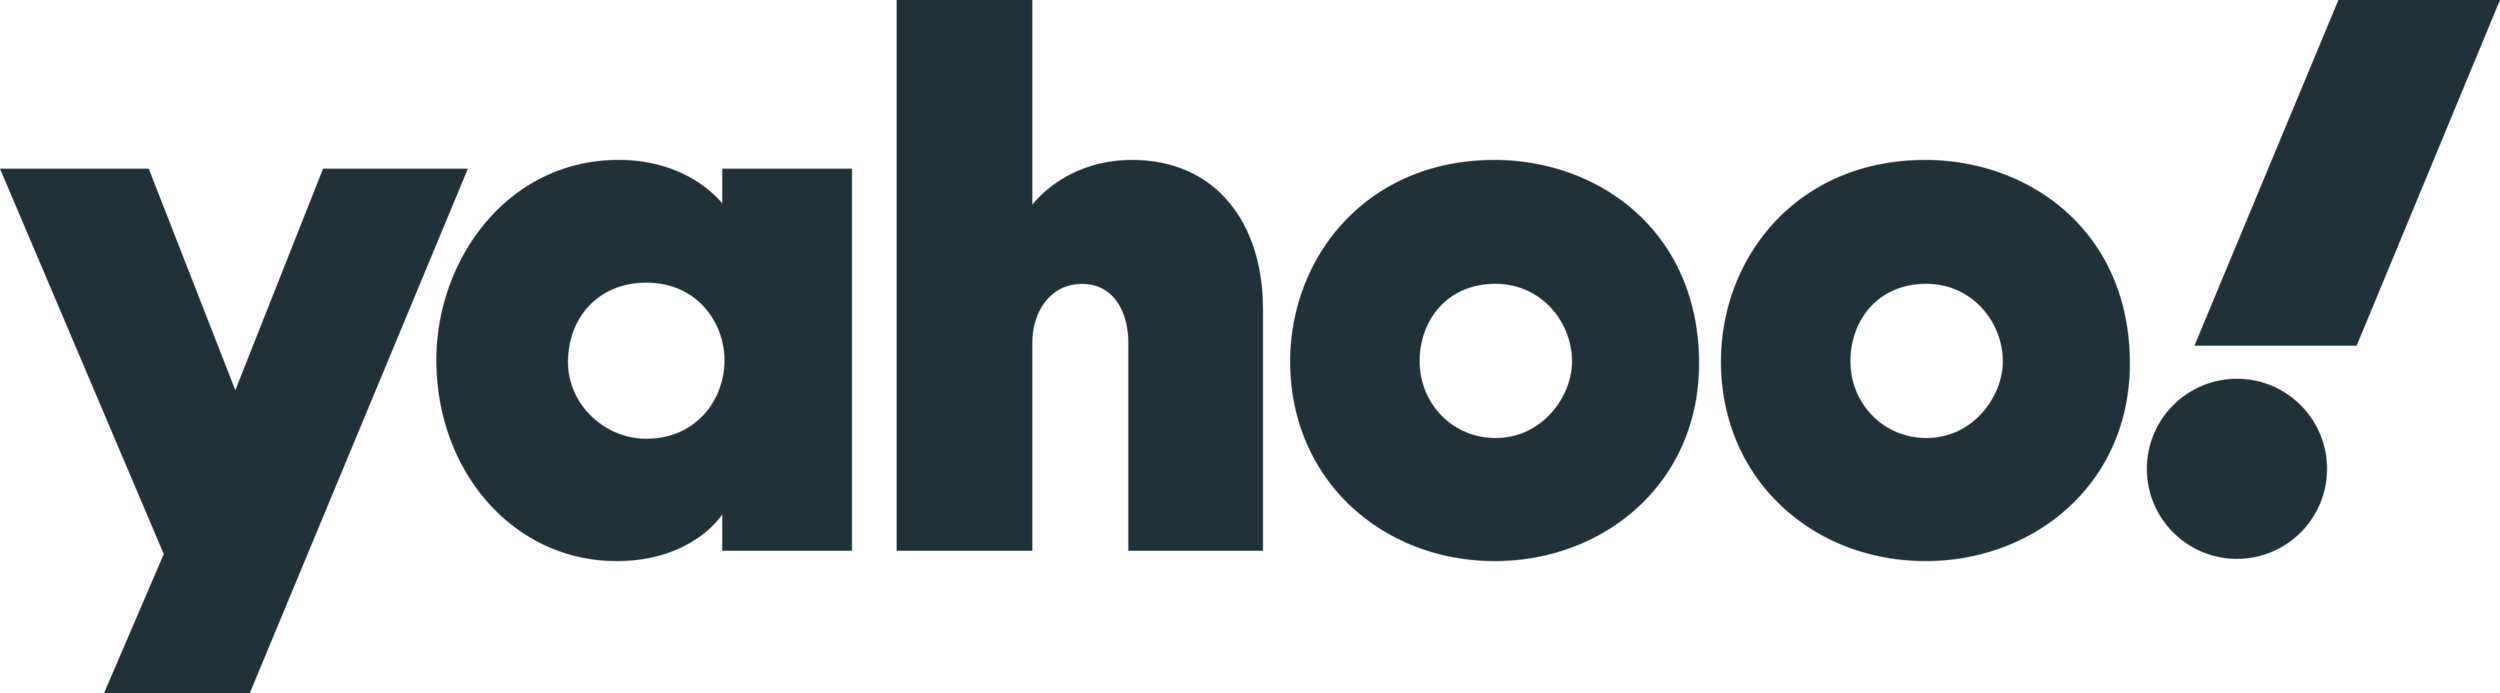 Yahoo-logo-off